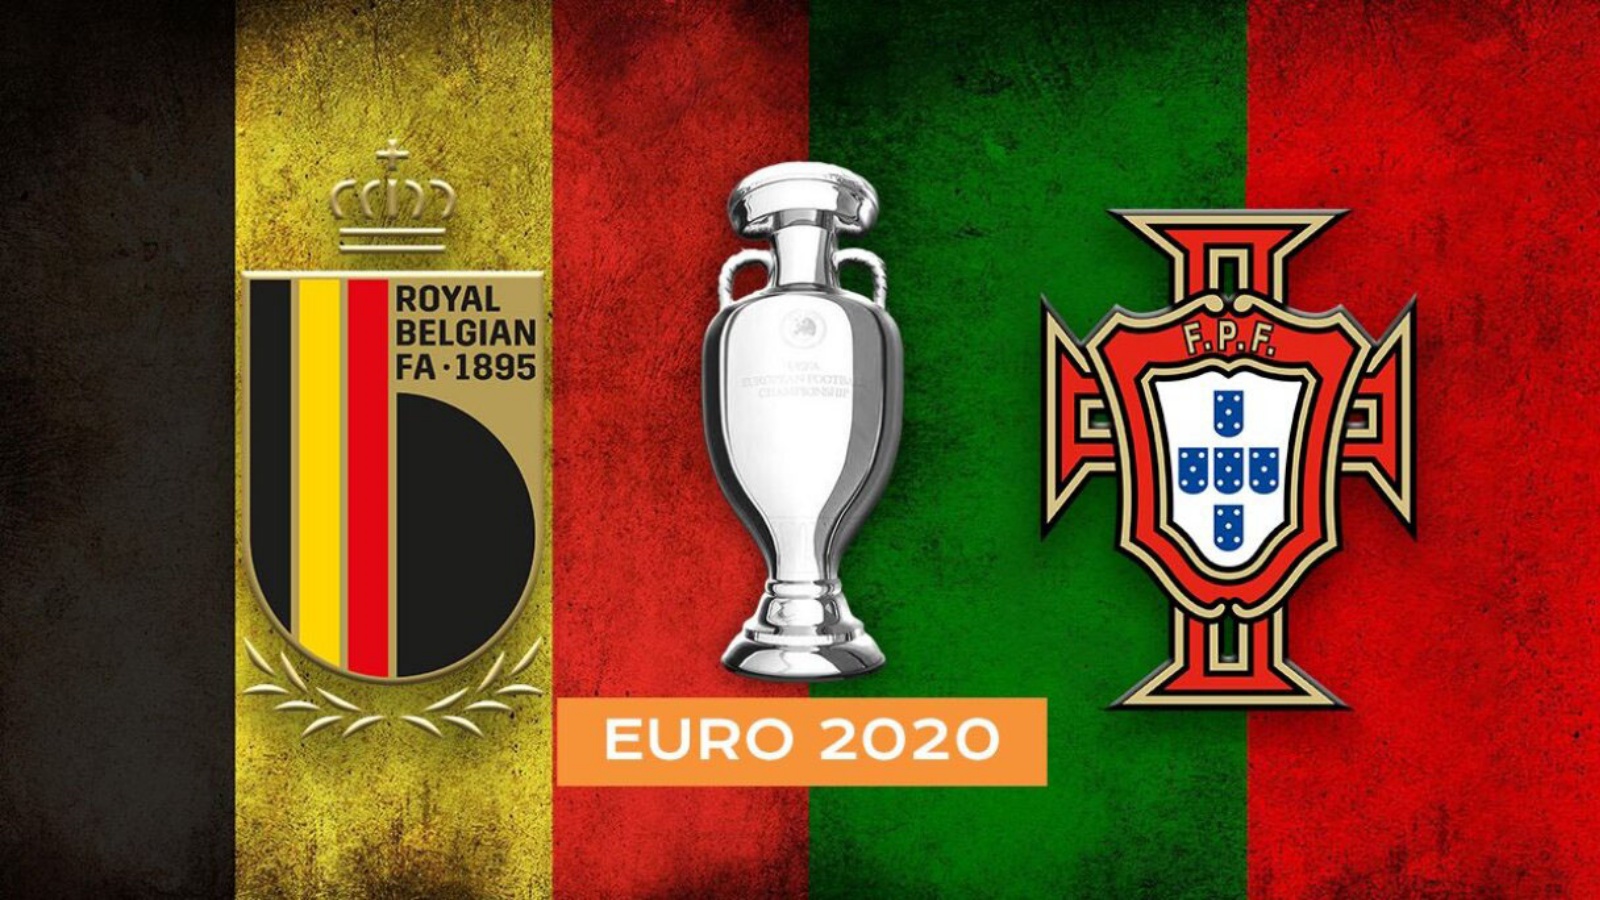 BELGIA – PORTUGALI PRO TV LIVE EURO 2020